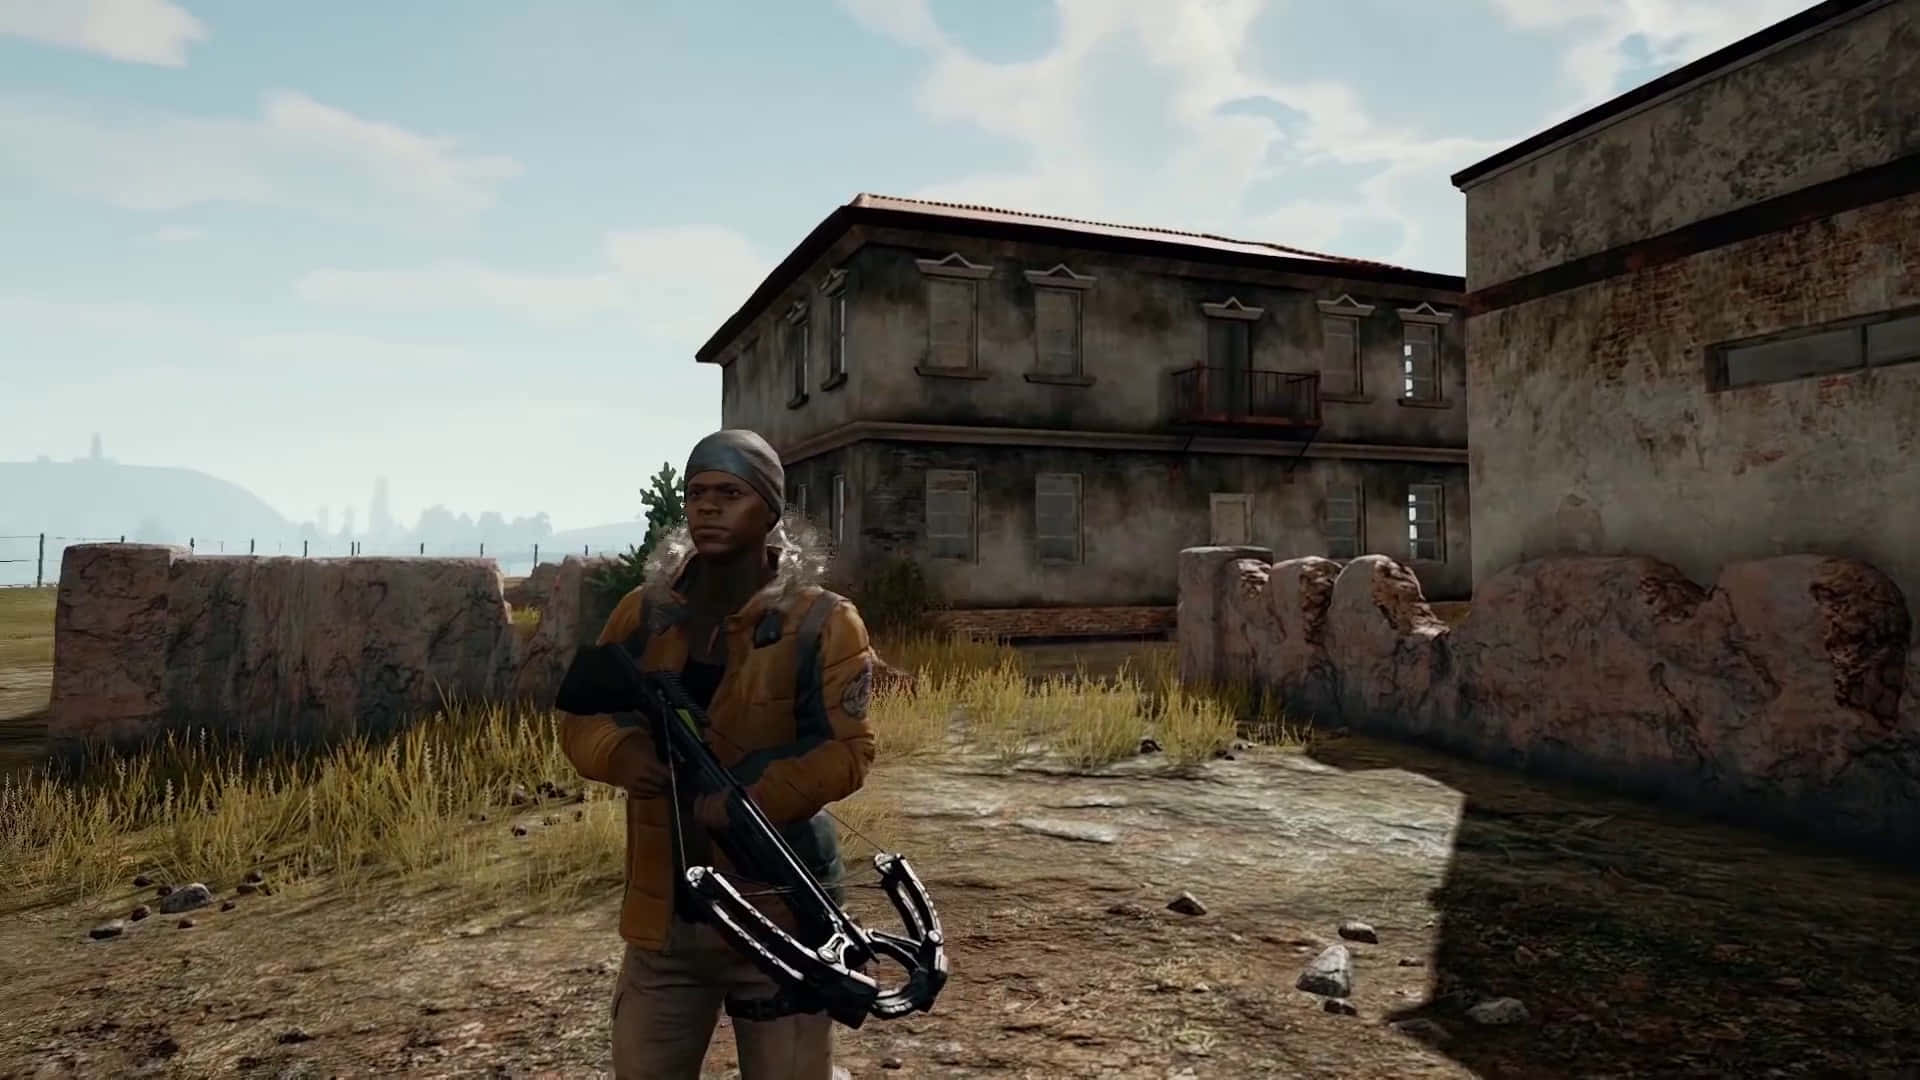 En mand med et gevær står foran et bygning. Wallpaper